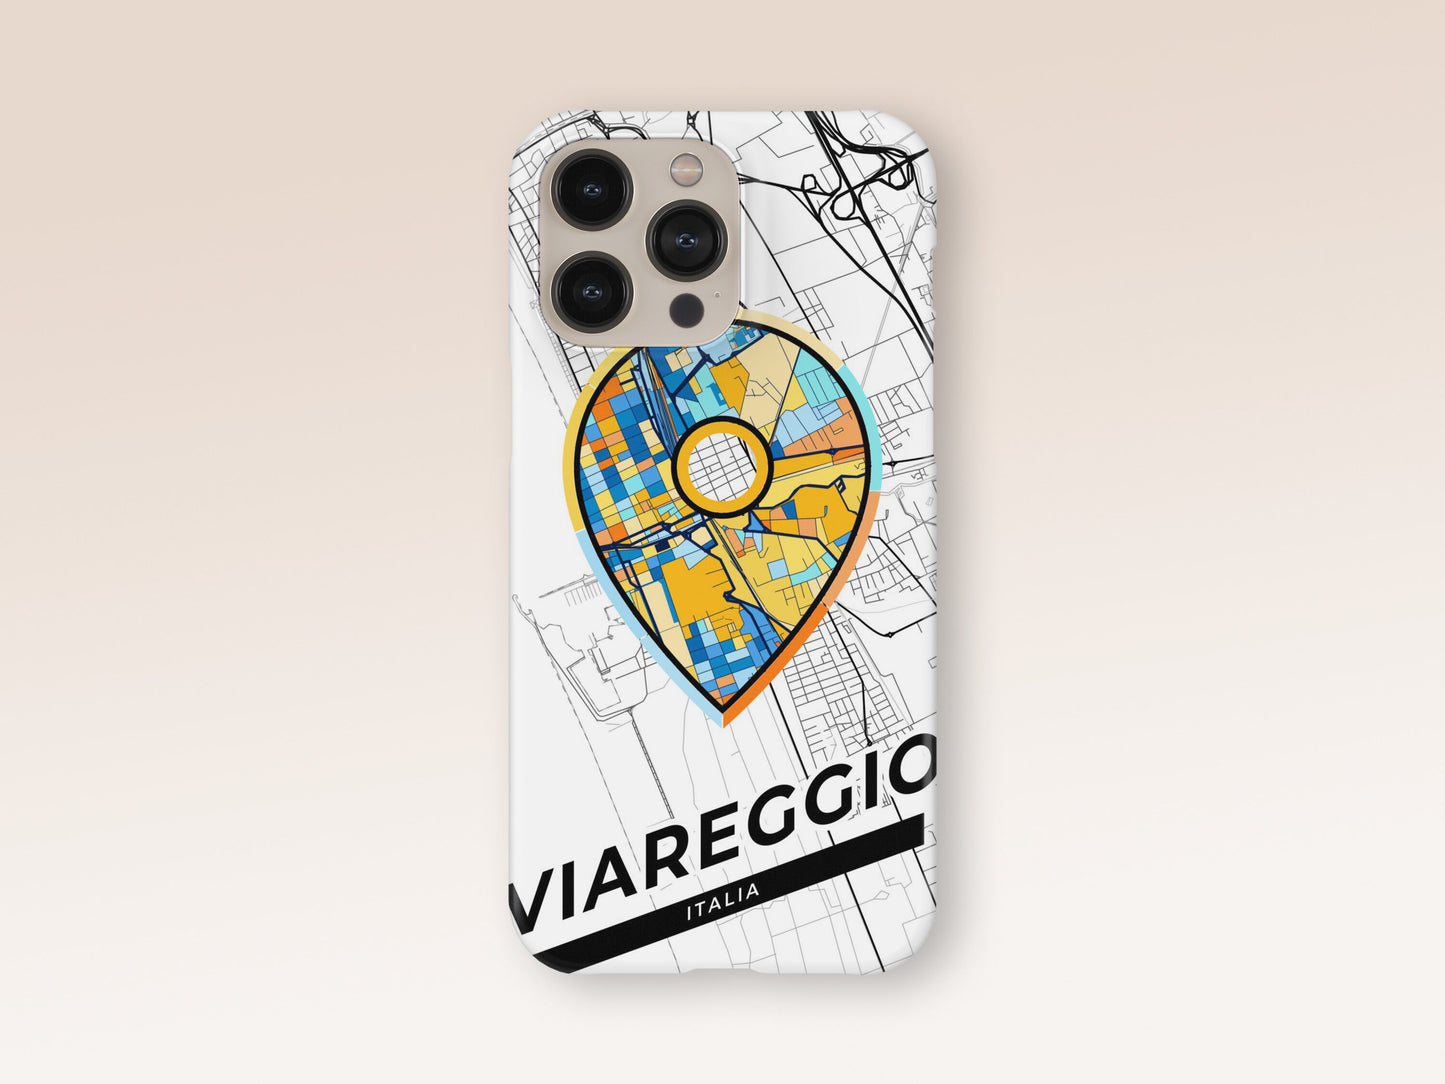 Viareggio Italy slim phone case with colorful icon 1